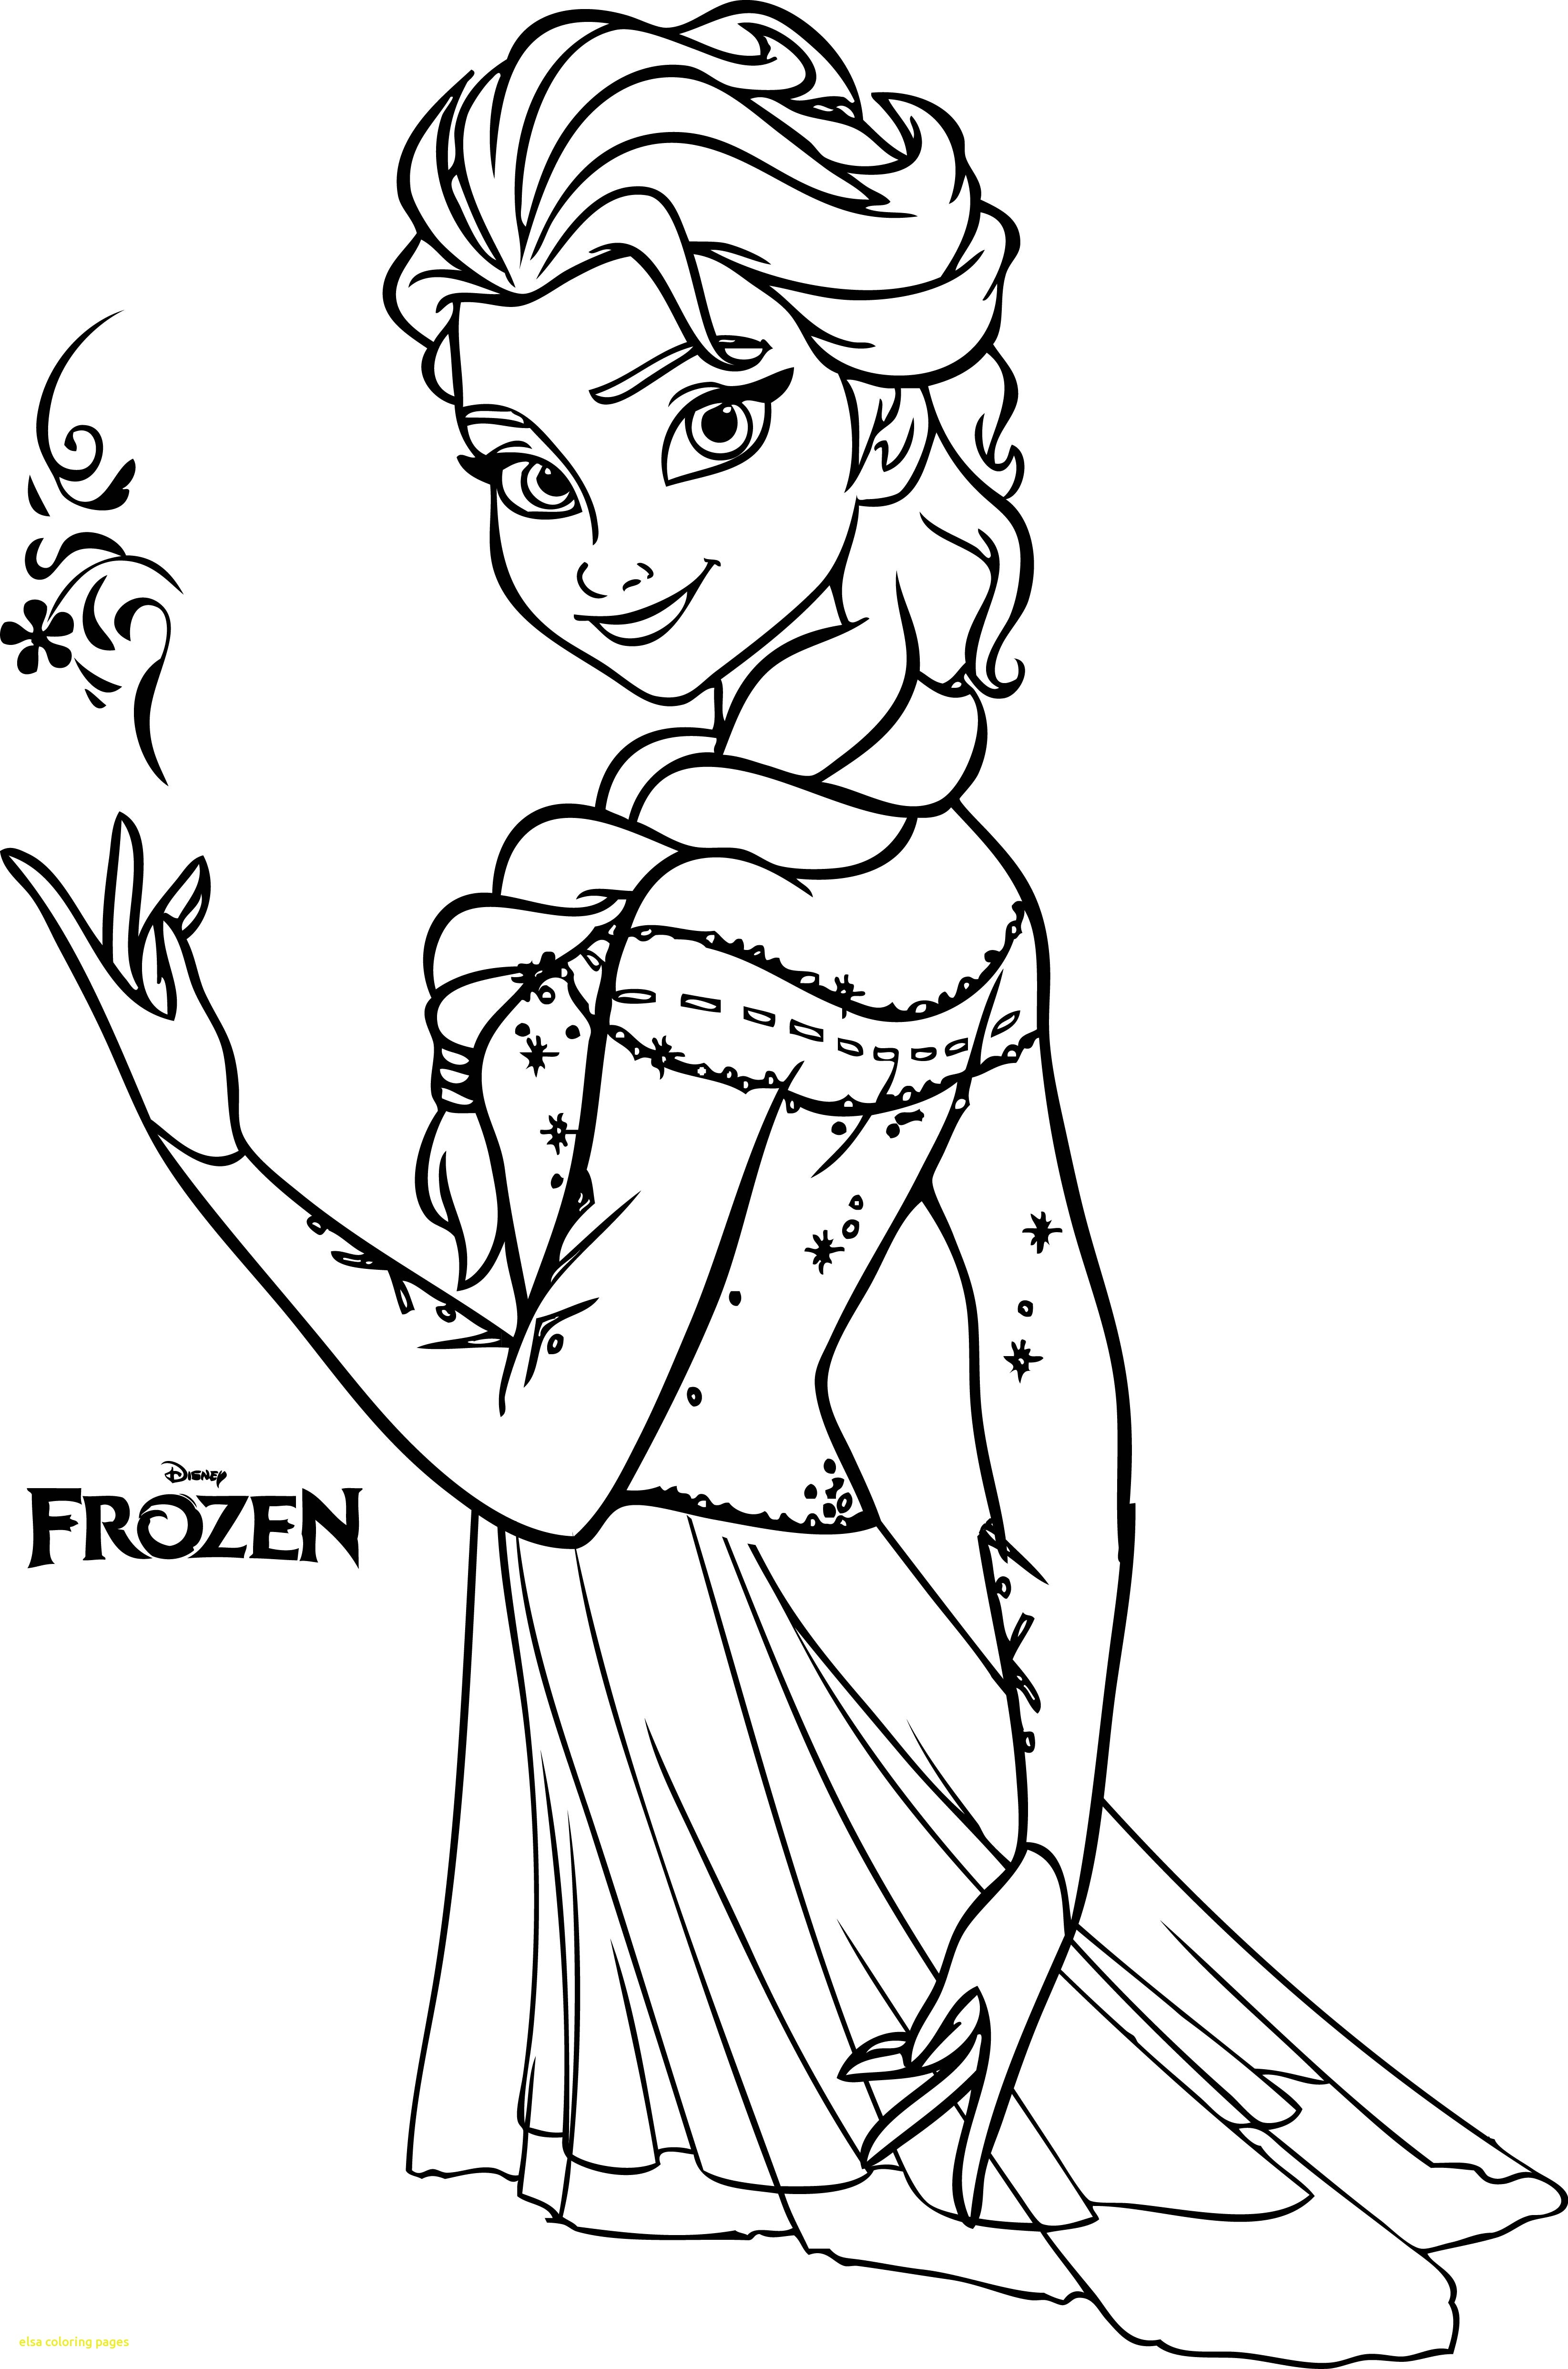 Disney Princess Coloring Pages Frozen Elsa At GetDrawings Free Download